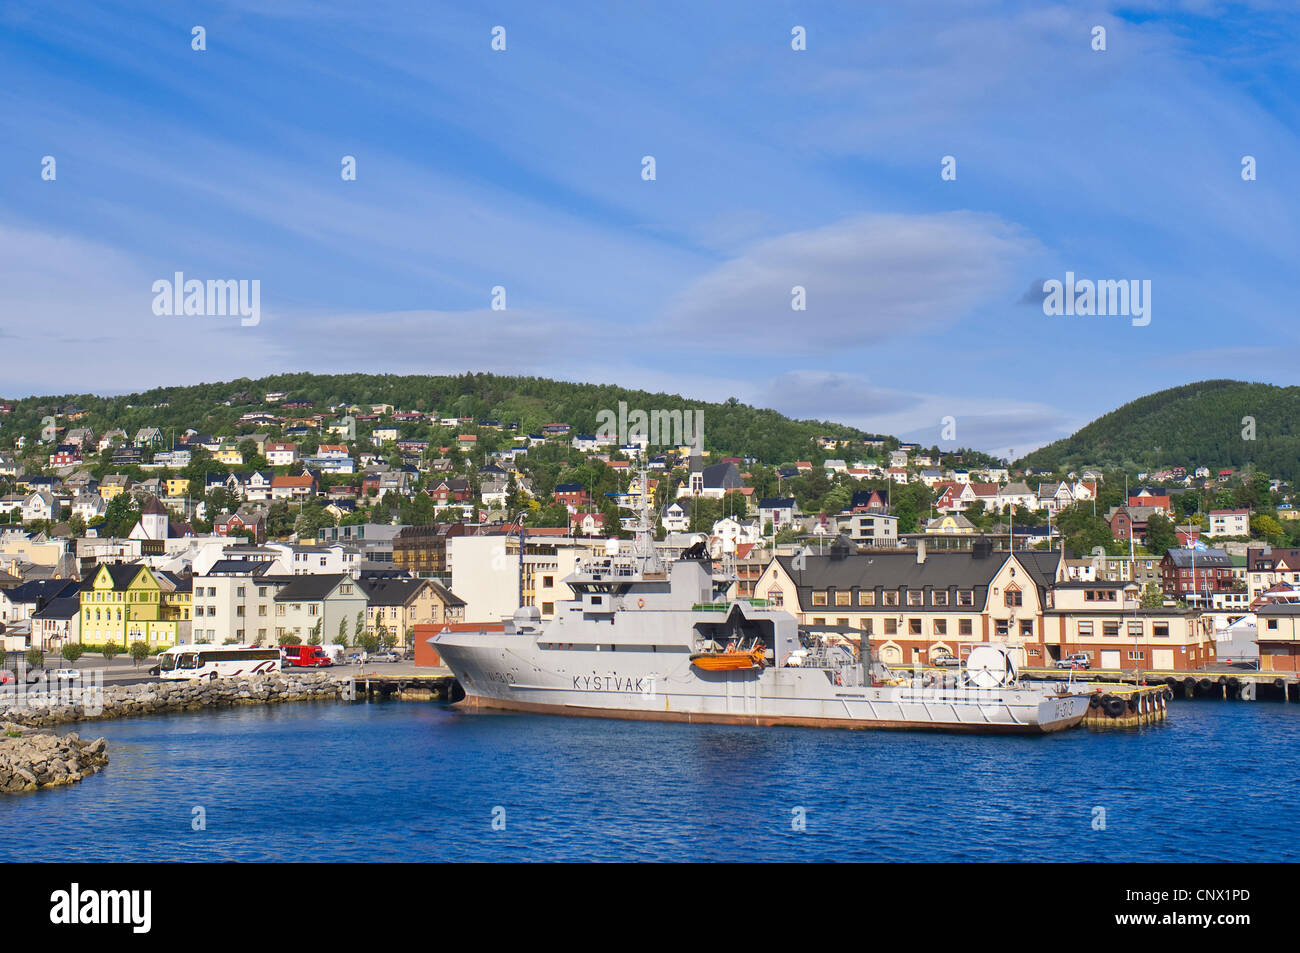 coast guards ships Kystvakt in port of Harstad, Norway, Harstad Stock Photo